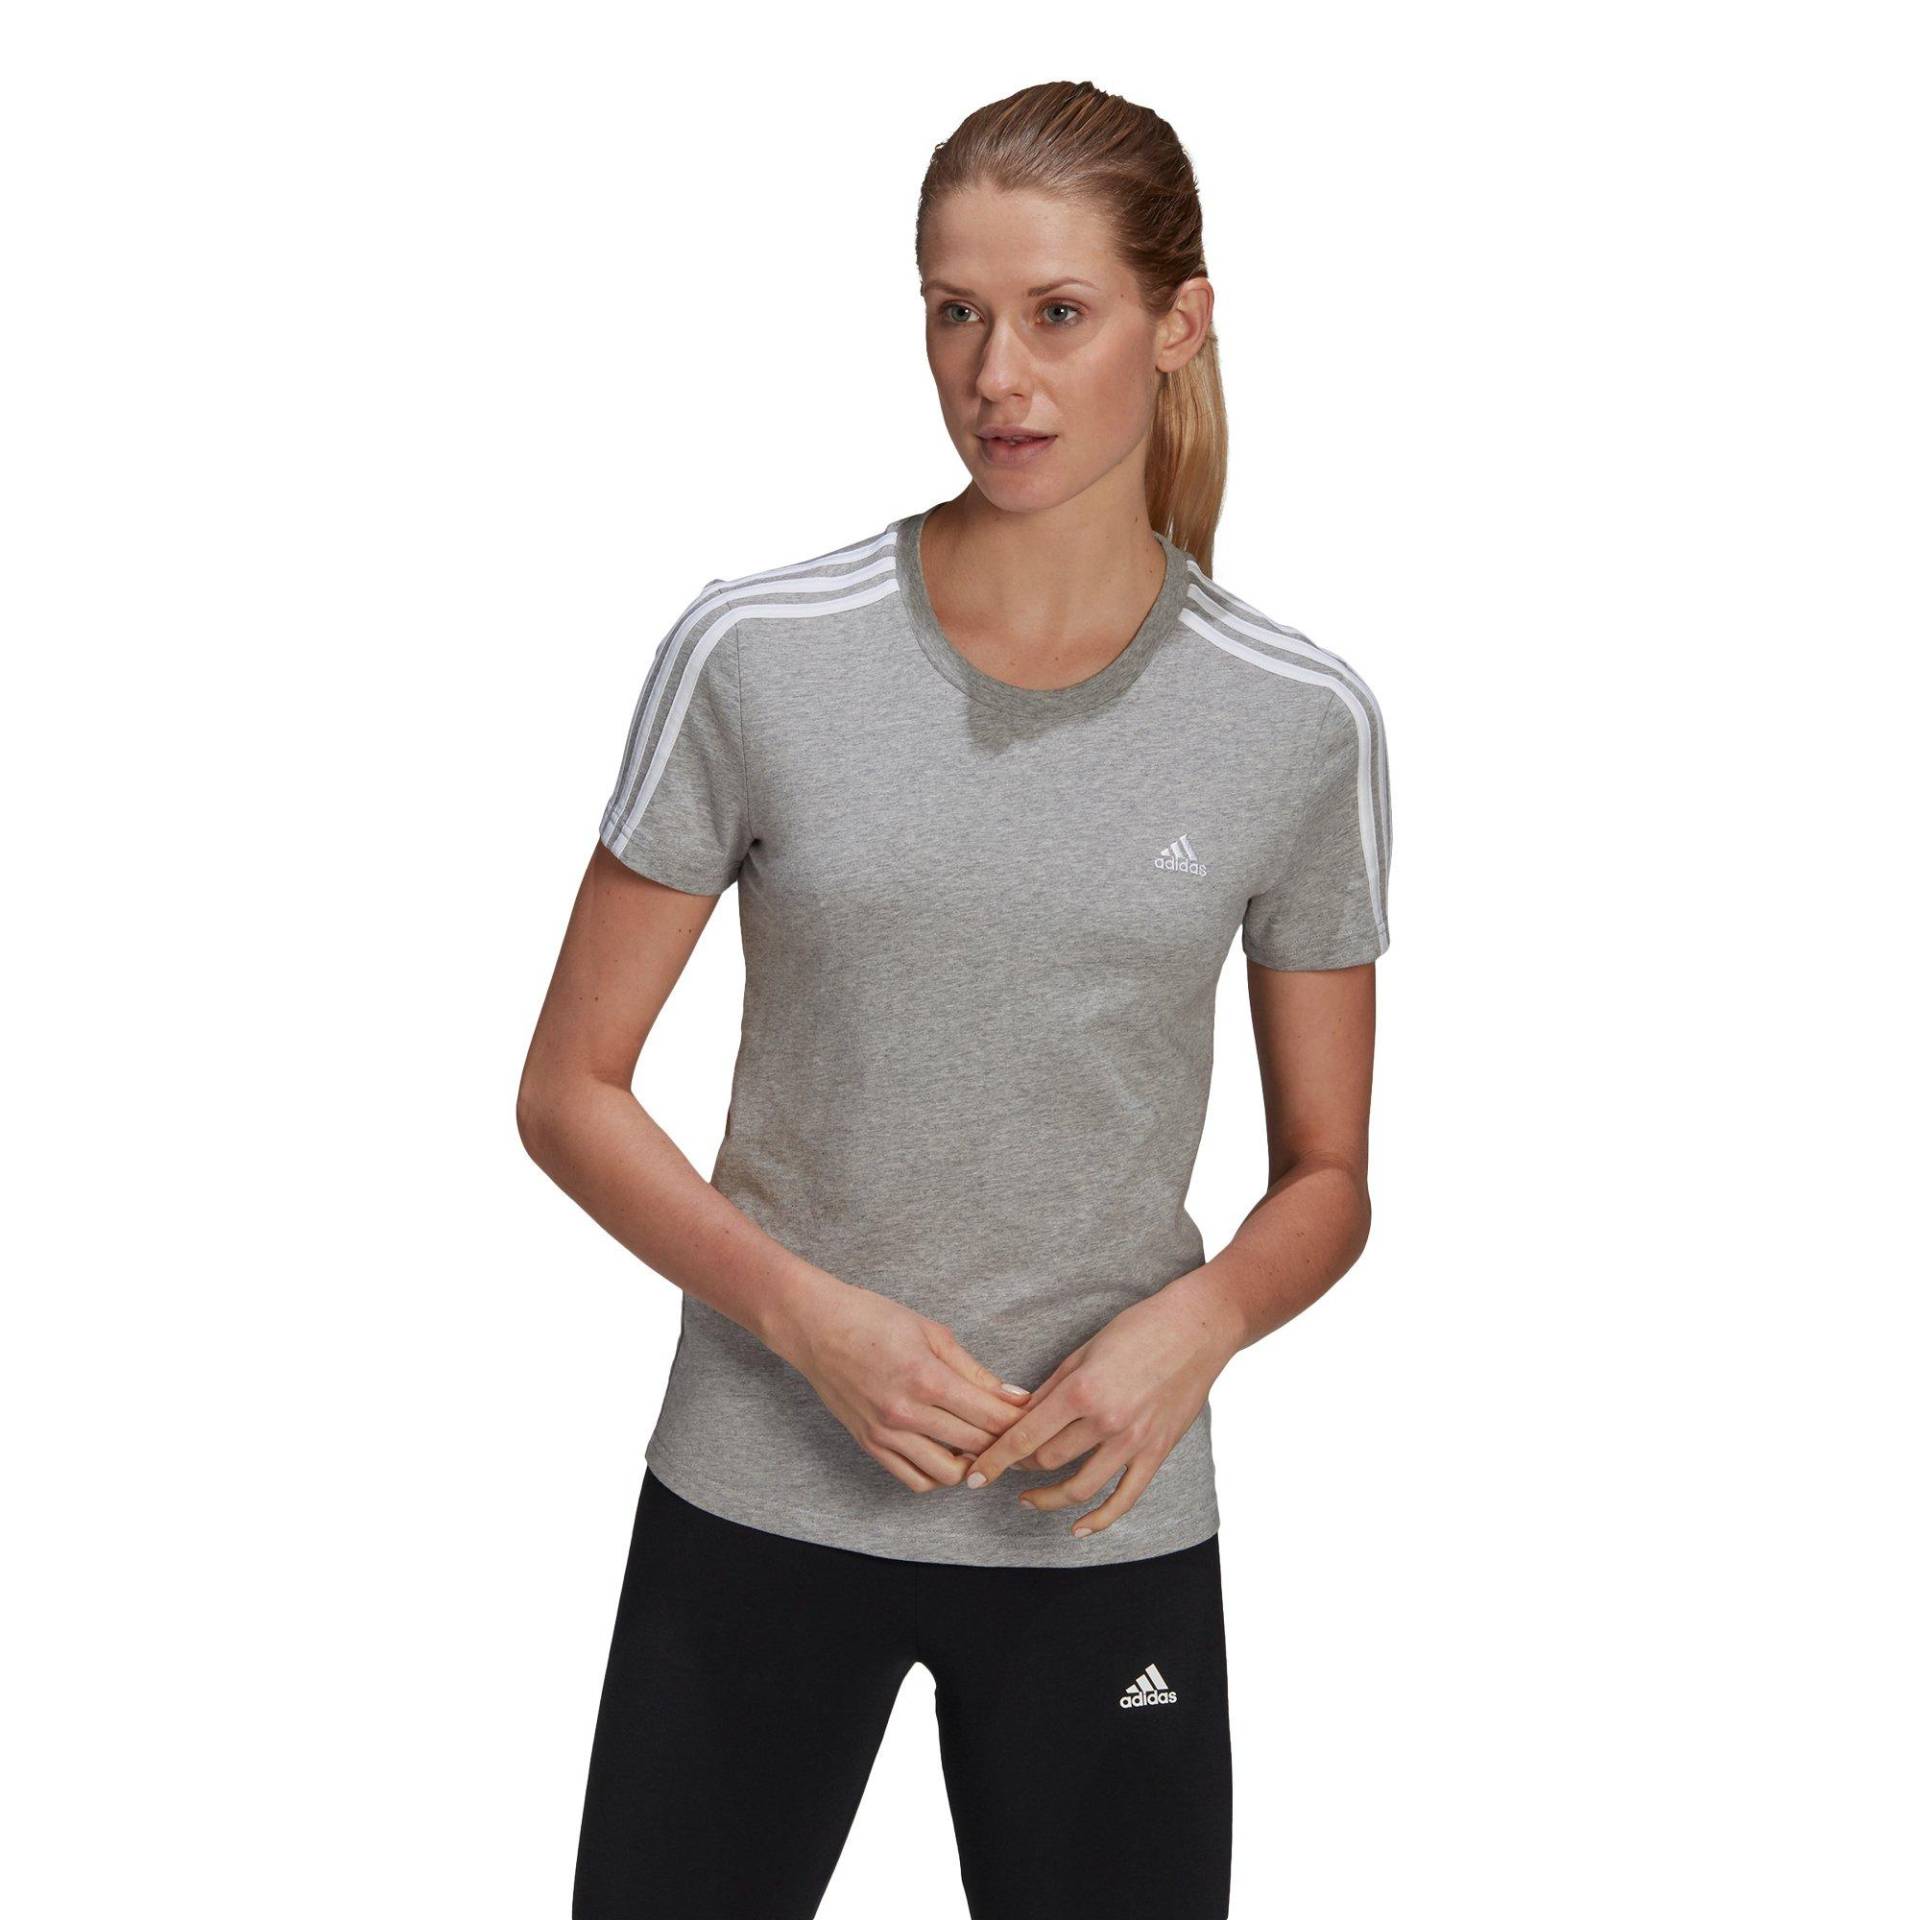 adidas T-shirt Damen Grau Melange XL von Adidas